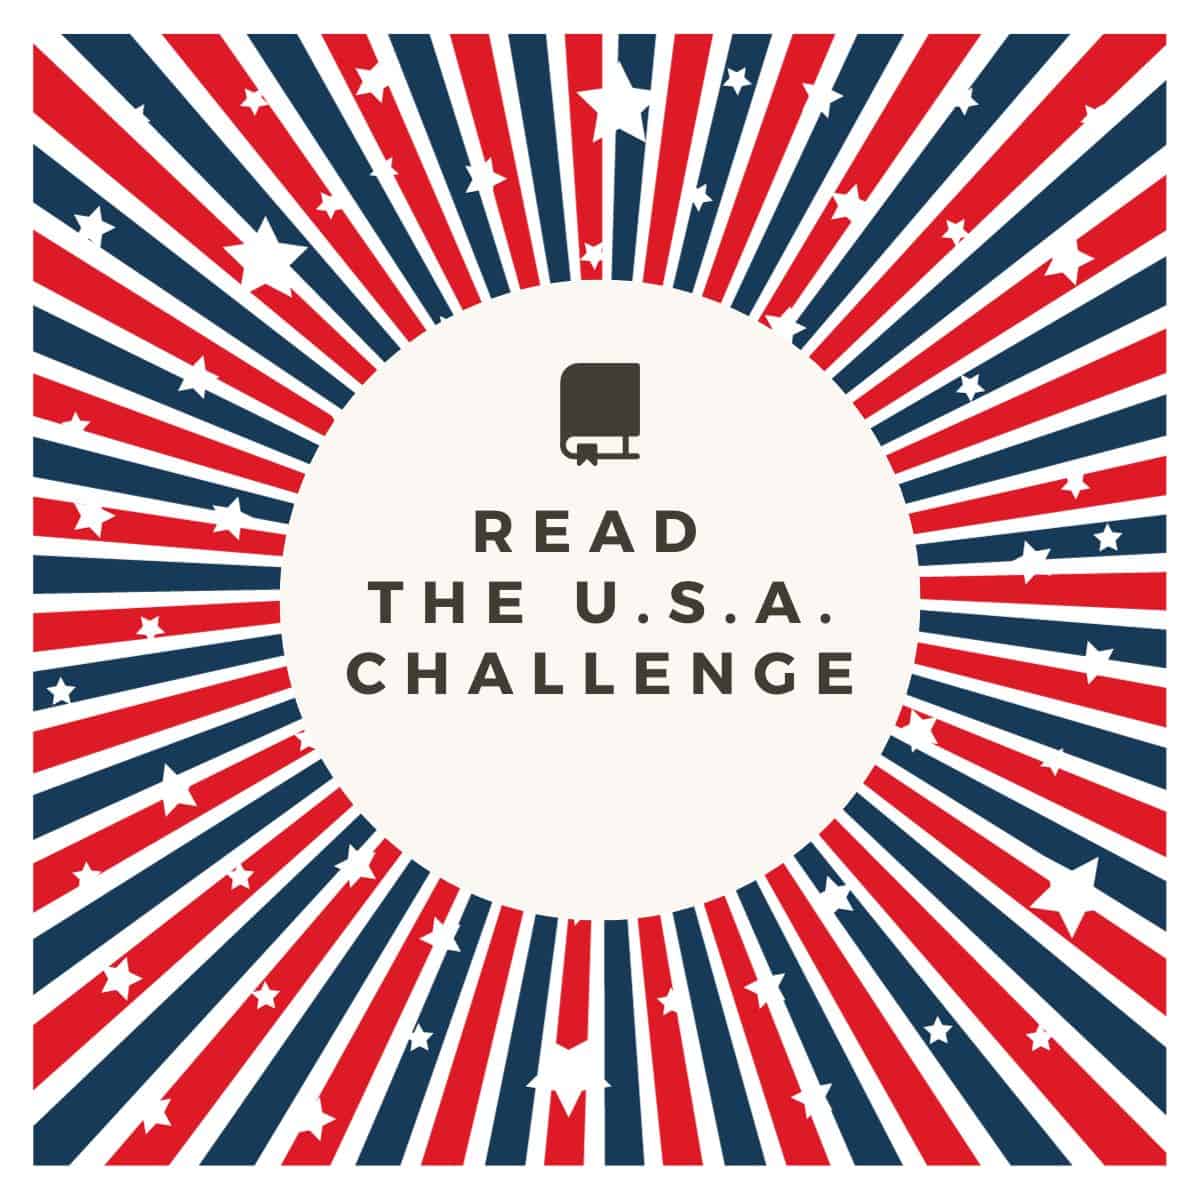 read the u.s.a. challenge.